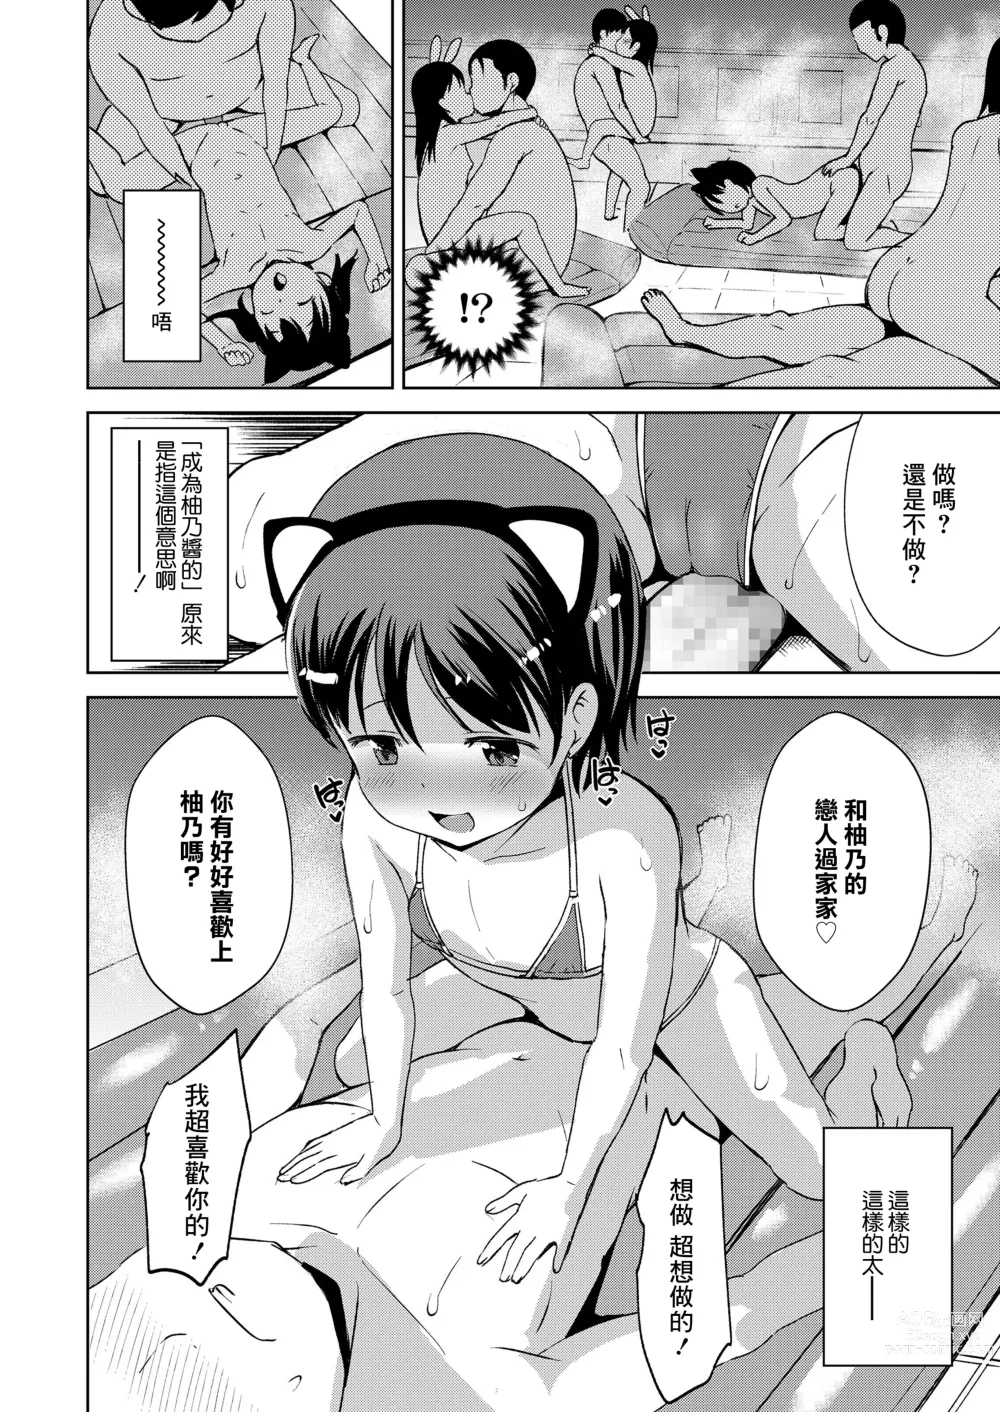 Page 12 of manga Yuno-chan Play